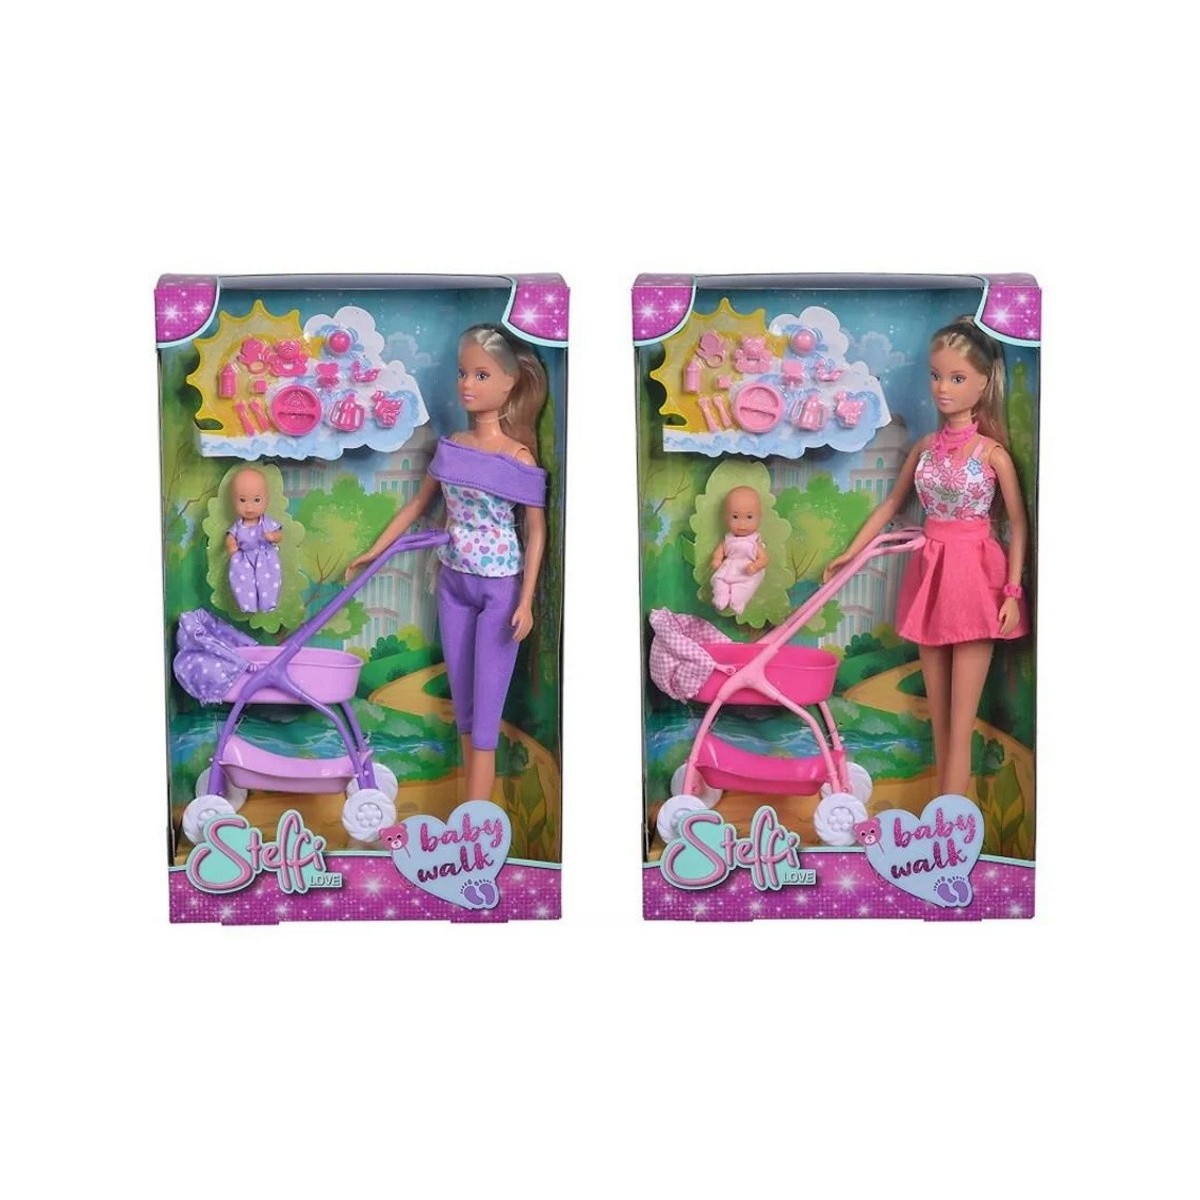 Barbie - Skipper balade en poussette